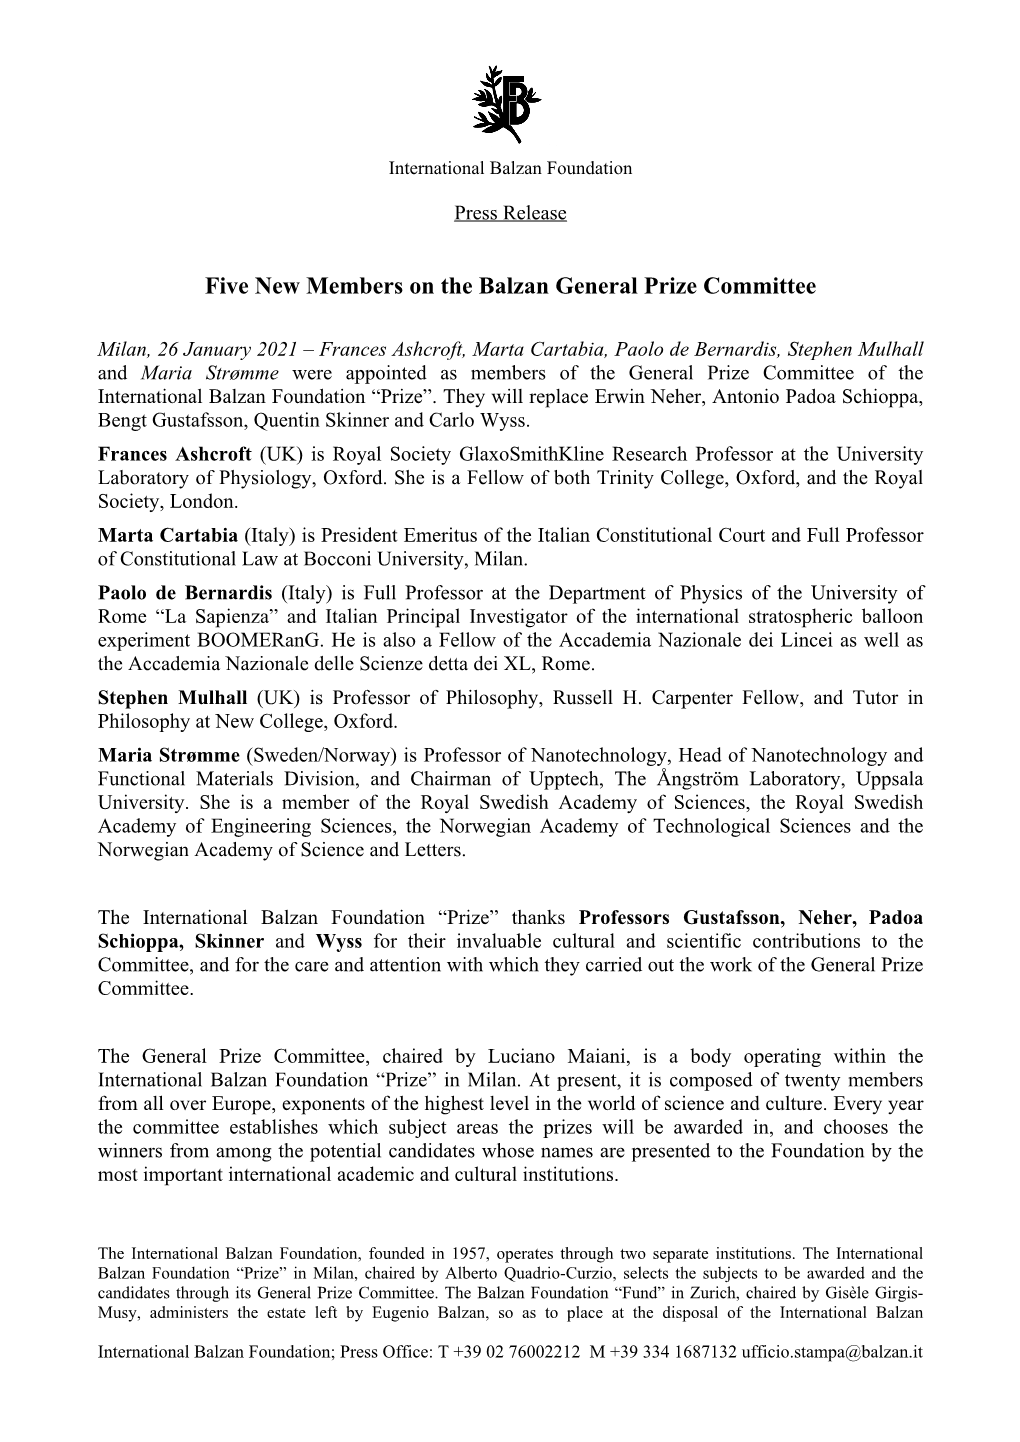 Five New Members on the Balzan General Prize Committee